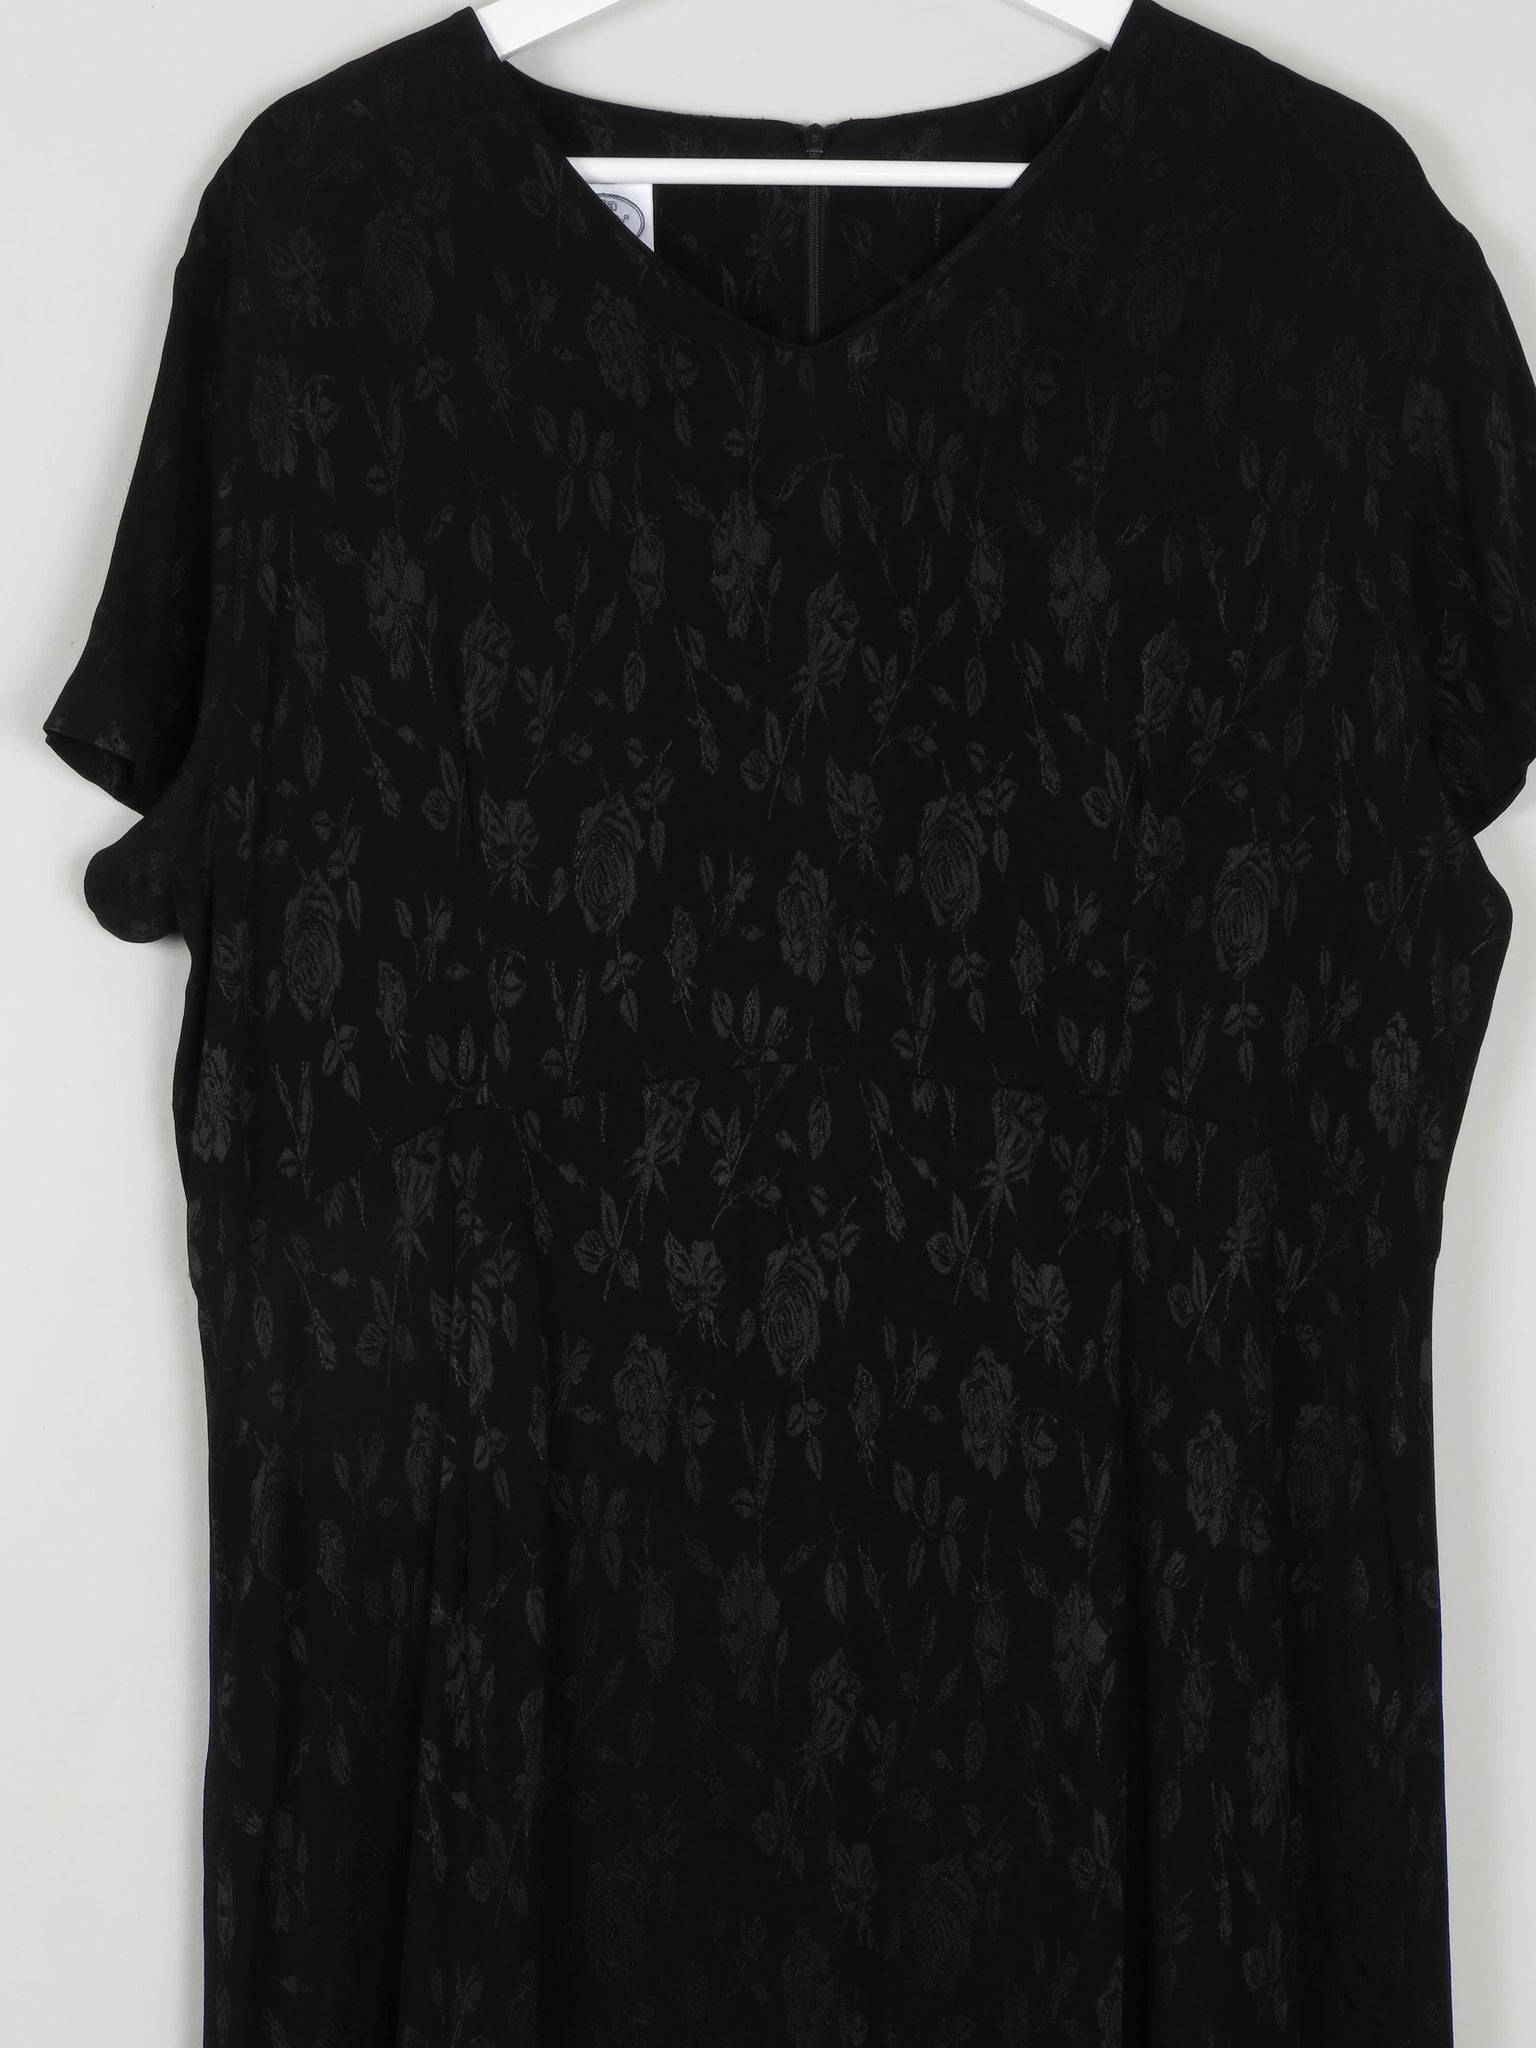 Black Jacquard Vintage Laura Ashley Dress XL Unowrn - The Harlequin